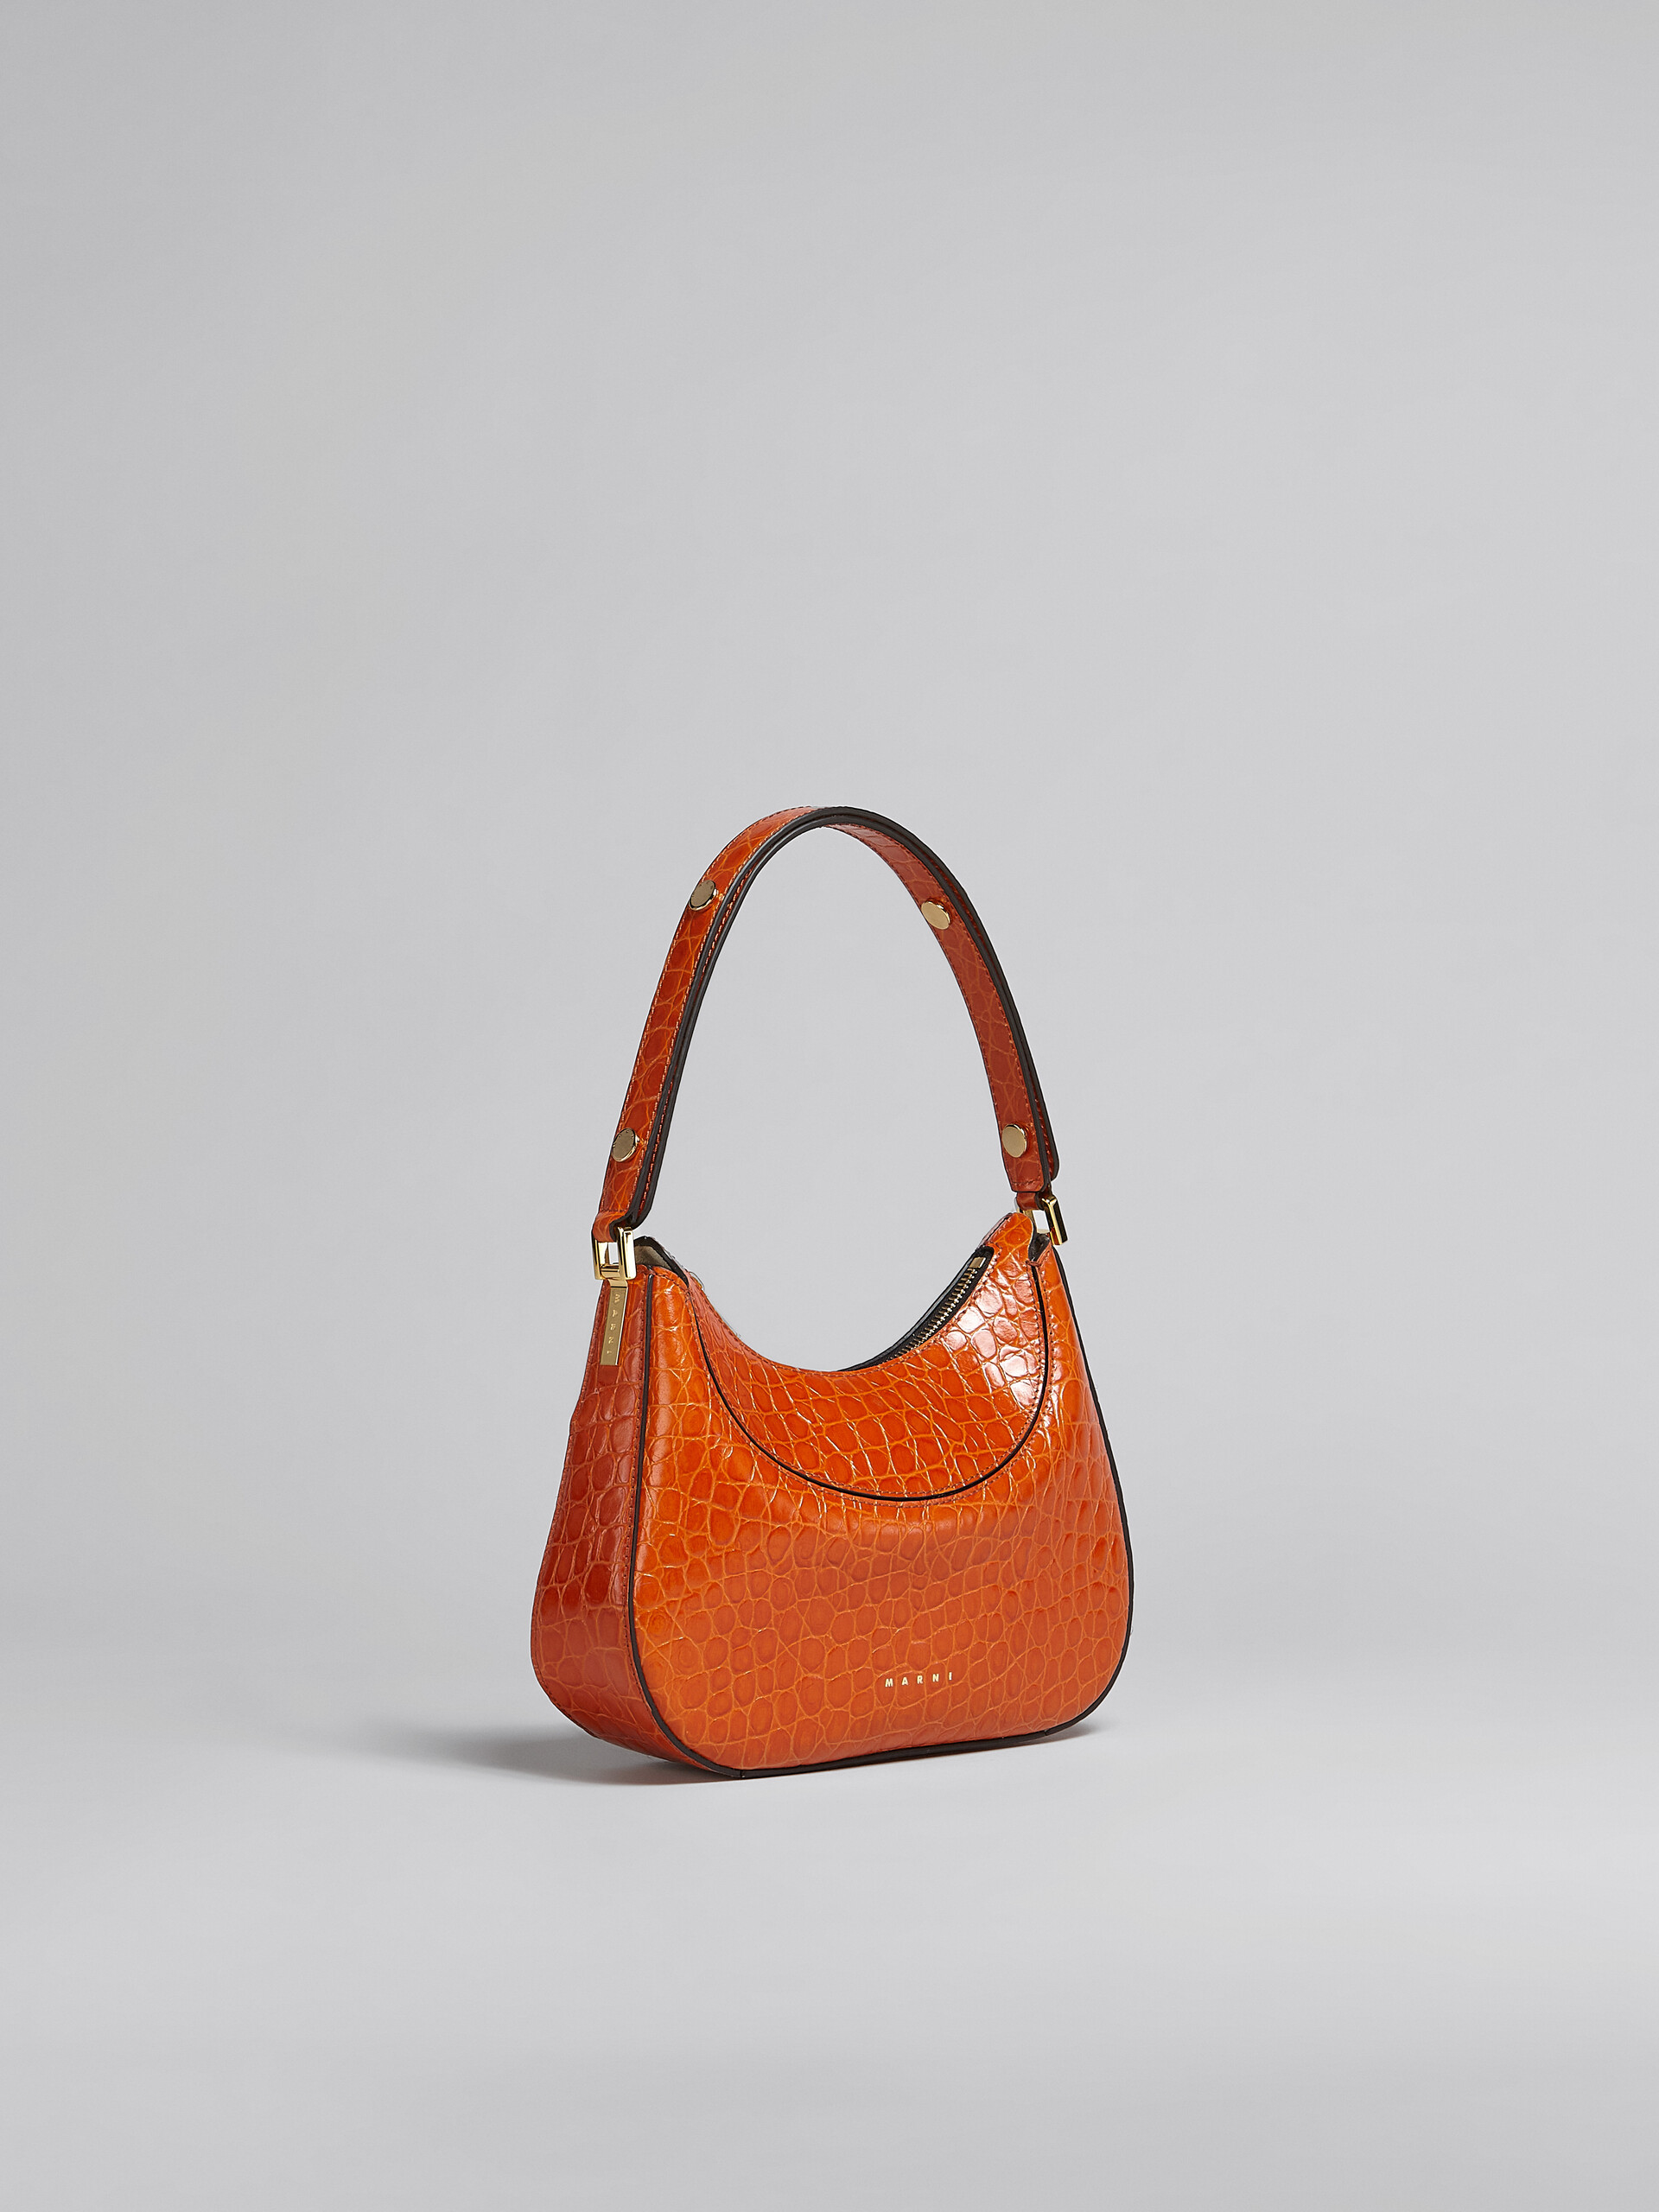 Milano Mini Bag in orange croco print leather - Handbag - Image 6